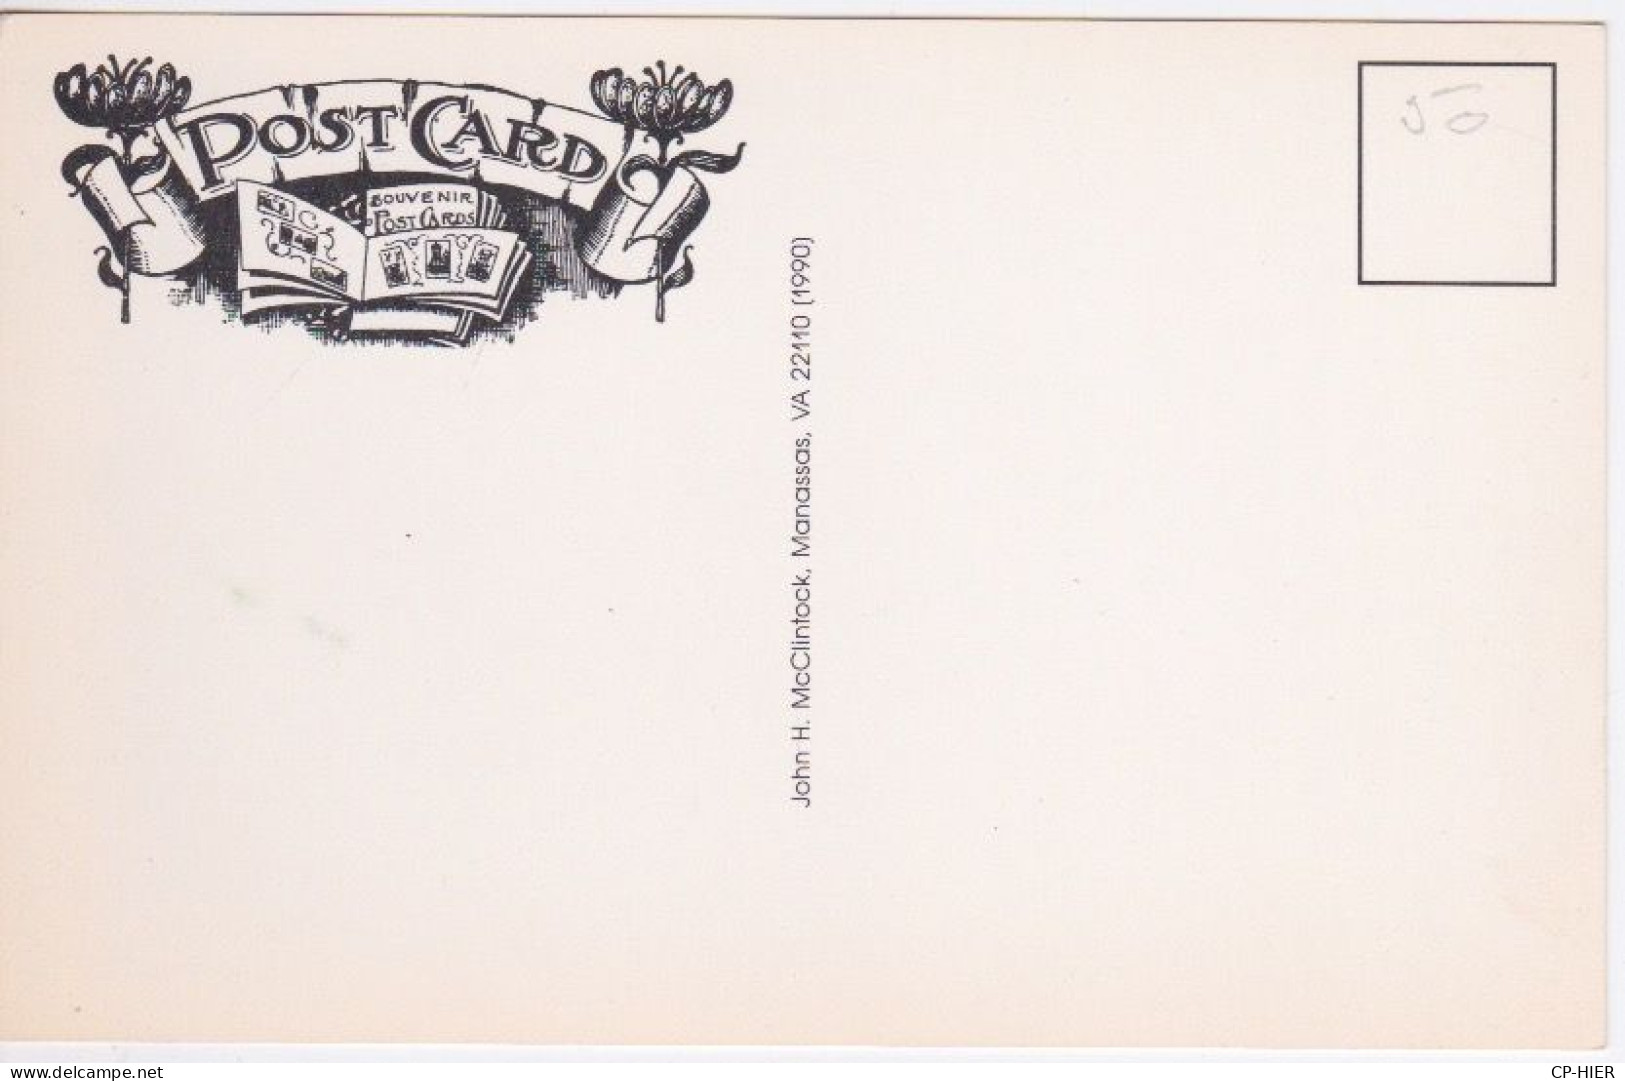 CARTE DE SALON 1991 - POST CARD -  PA  Etats-Unis-Pennsylvania - HUMOUR BICYCLETTE - Beursen Voor Verzamellars